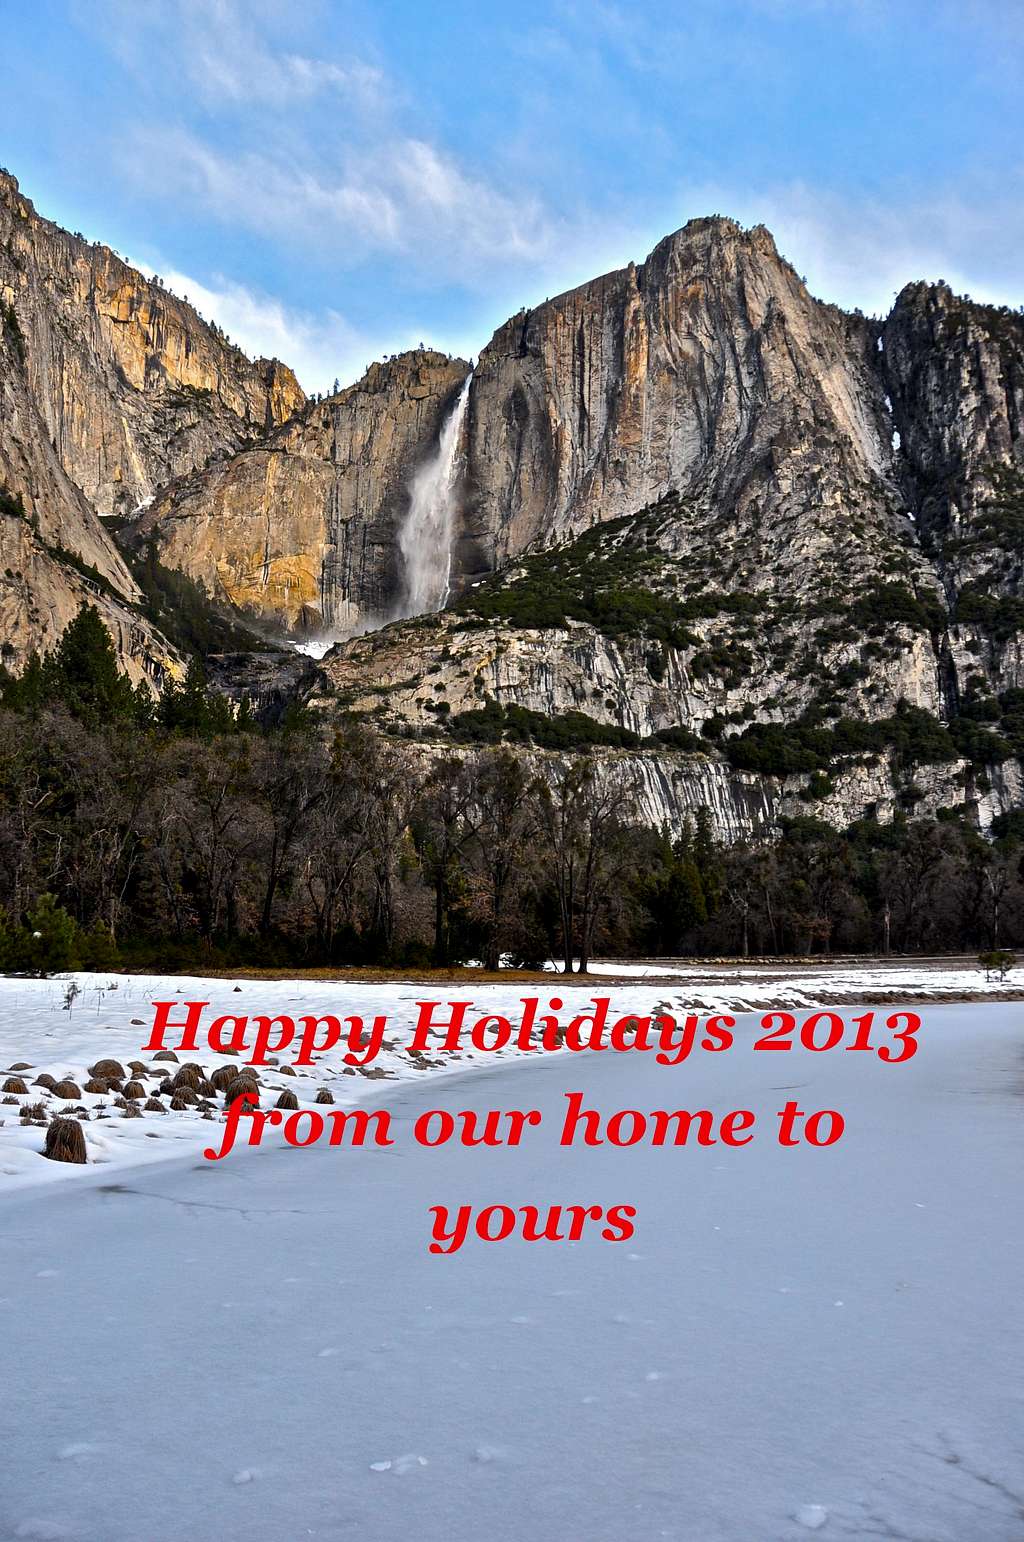 Holiday Greetings 2013